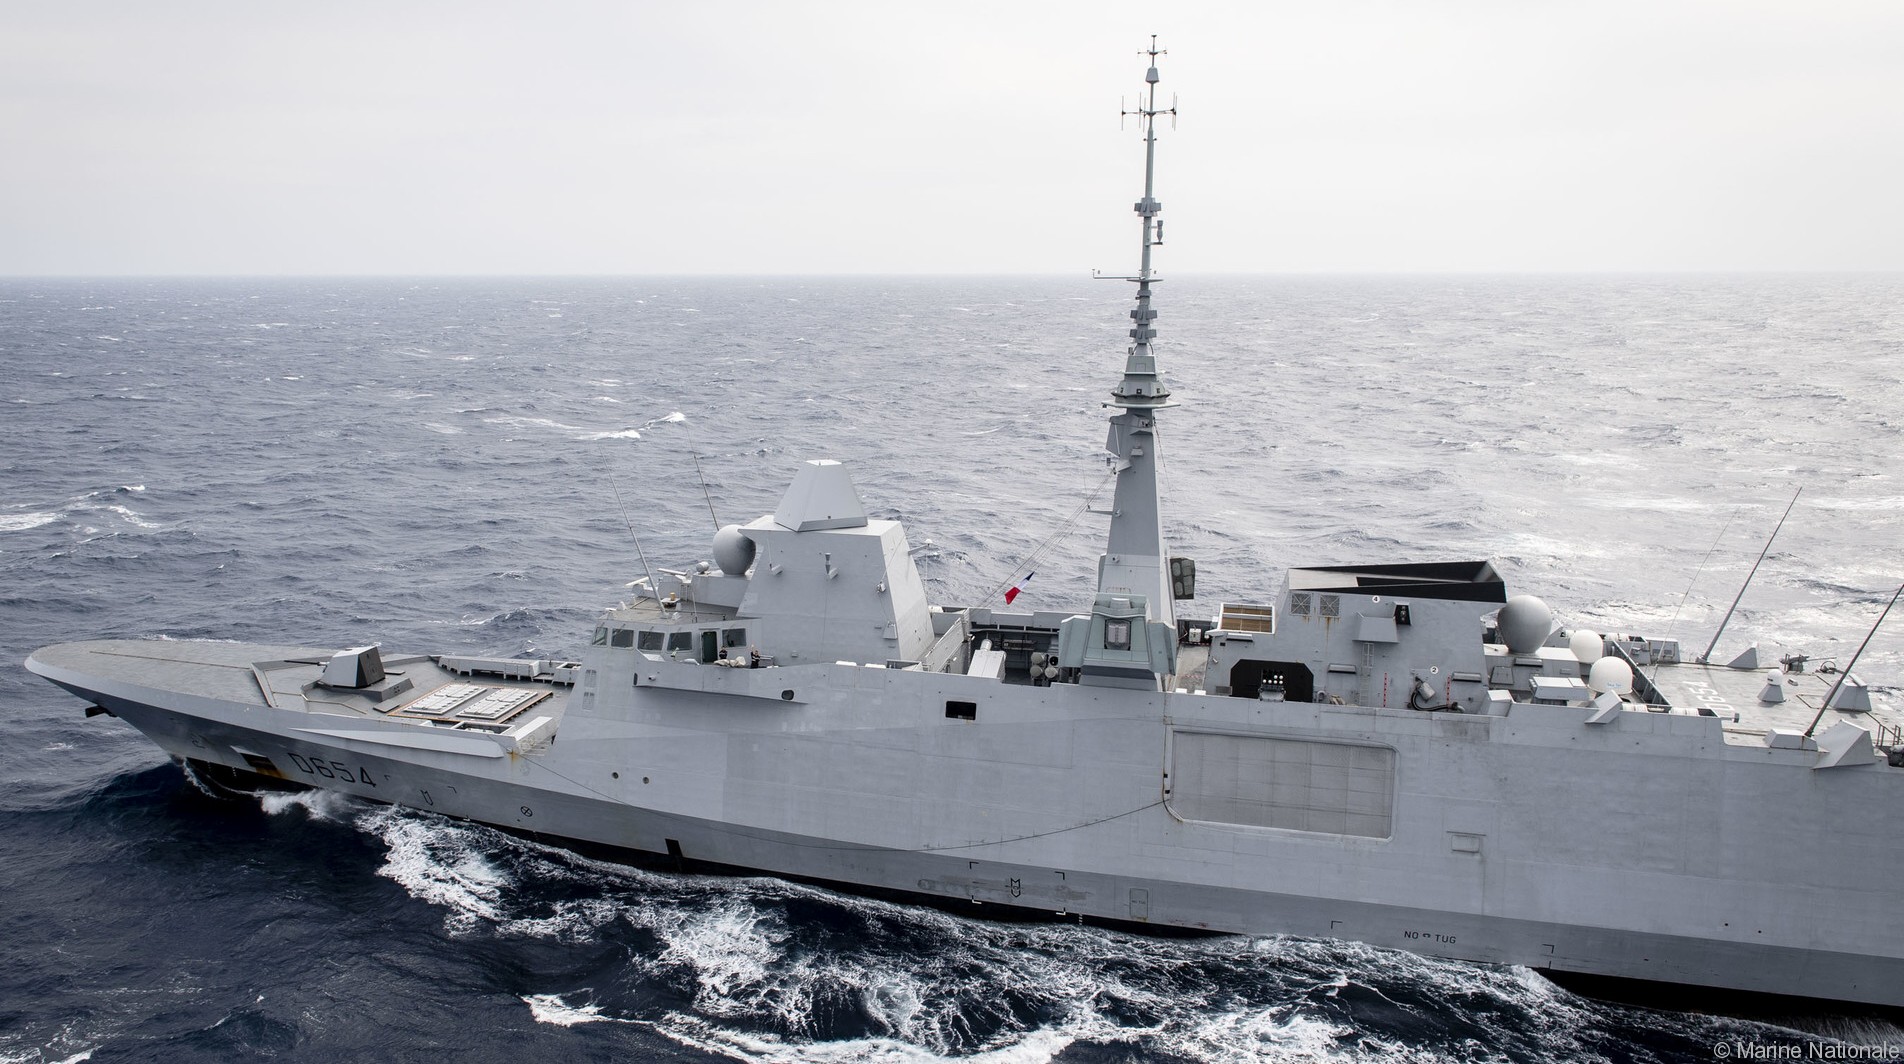 d-654 fs auvergne fremm aquitaine class frigate fregate multi purpose french navy marine nationale 14 mm40 exocet ssm missile